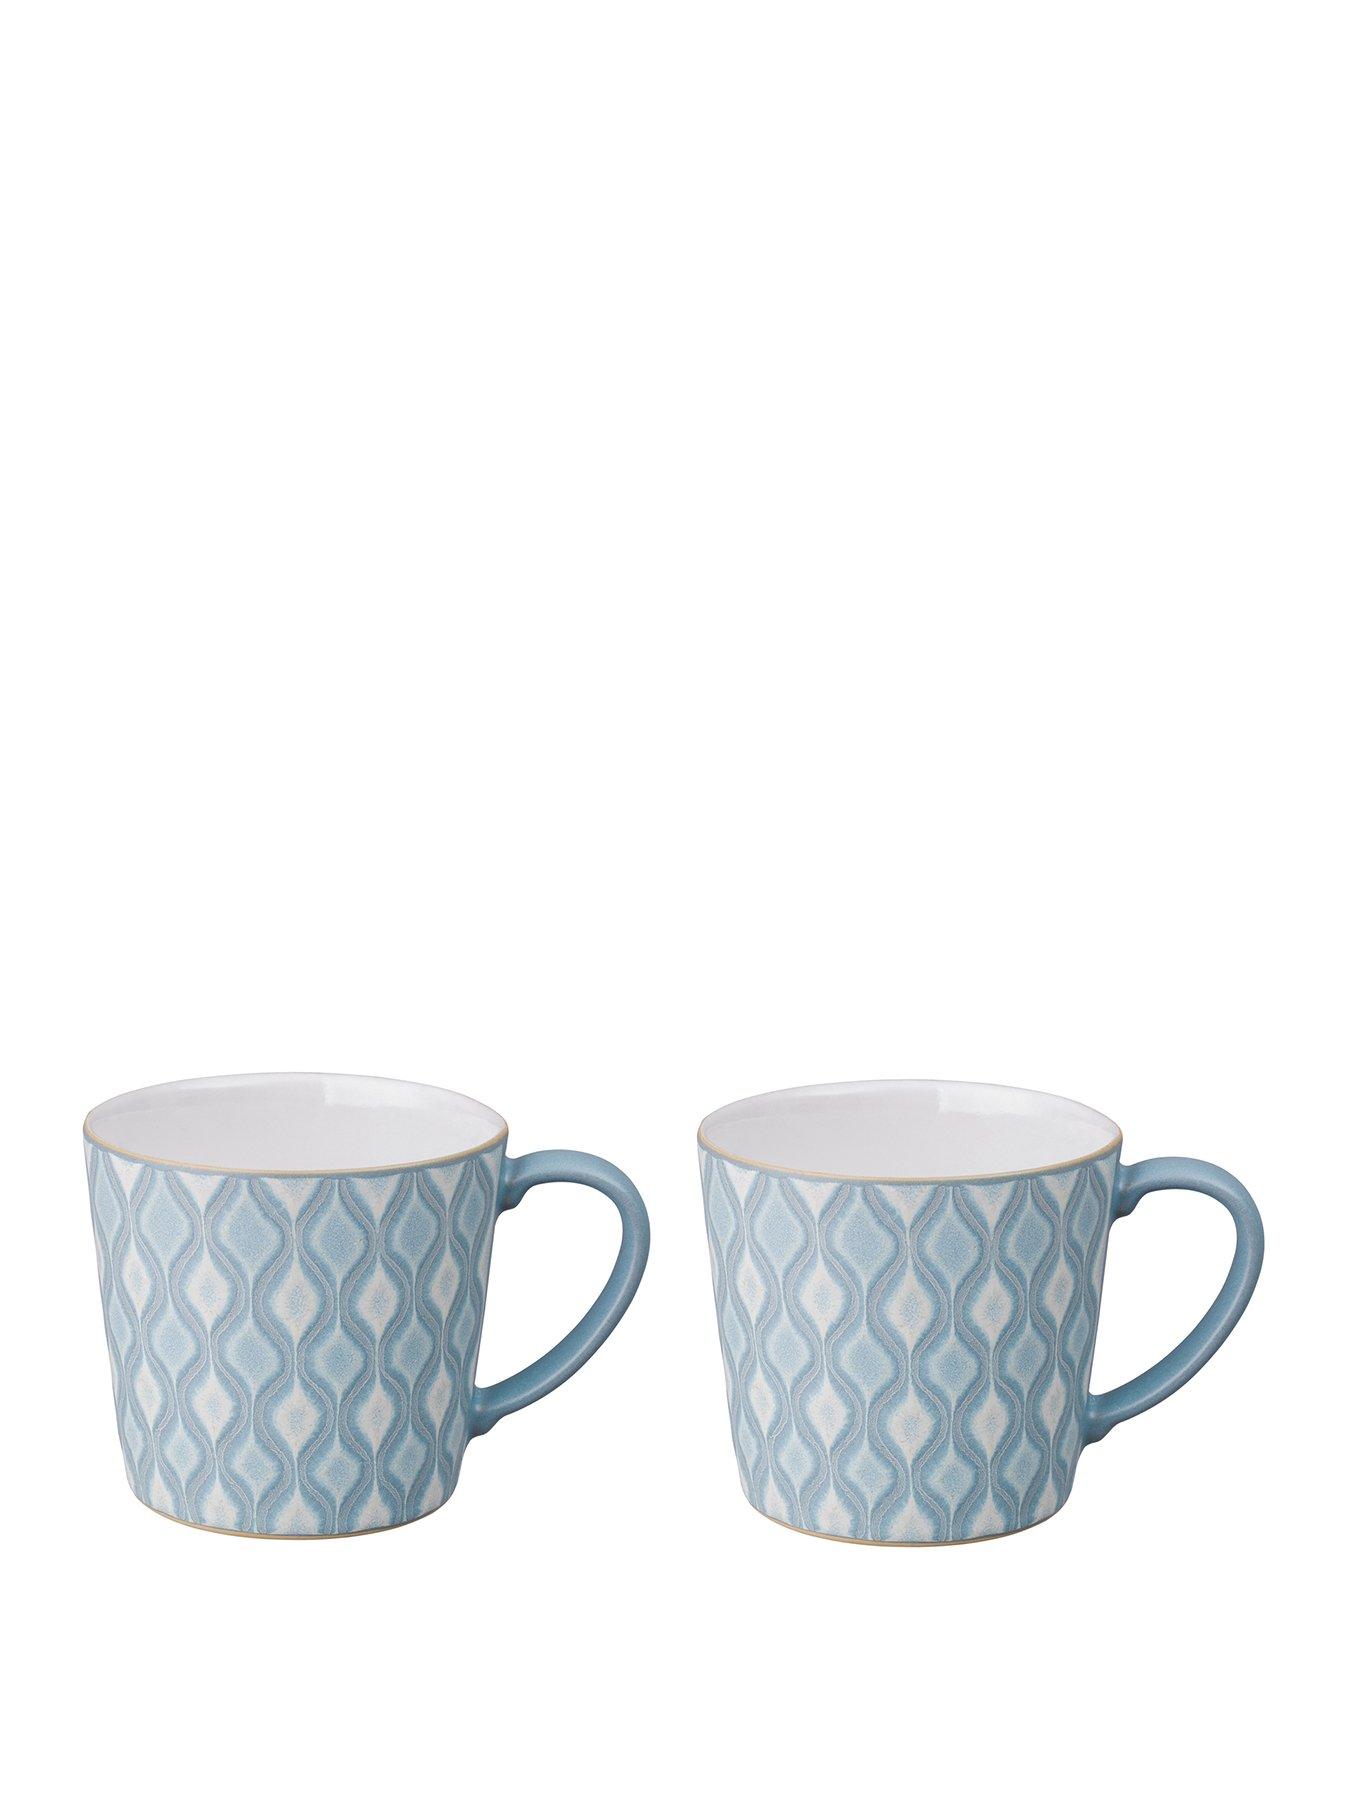 Details about   DISNEY PRINCESS Ceramic Pottery Large Coffee Mug Tea Cup Multi-Color Pink 20 oz 